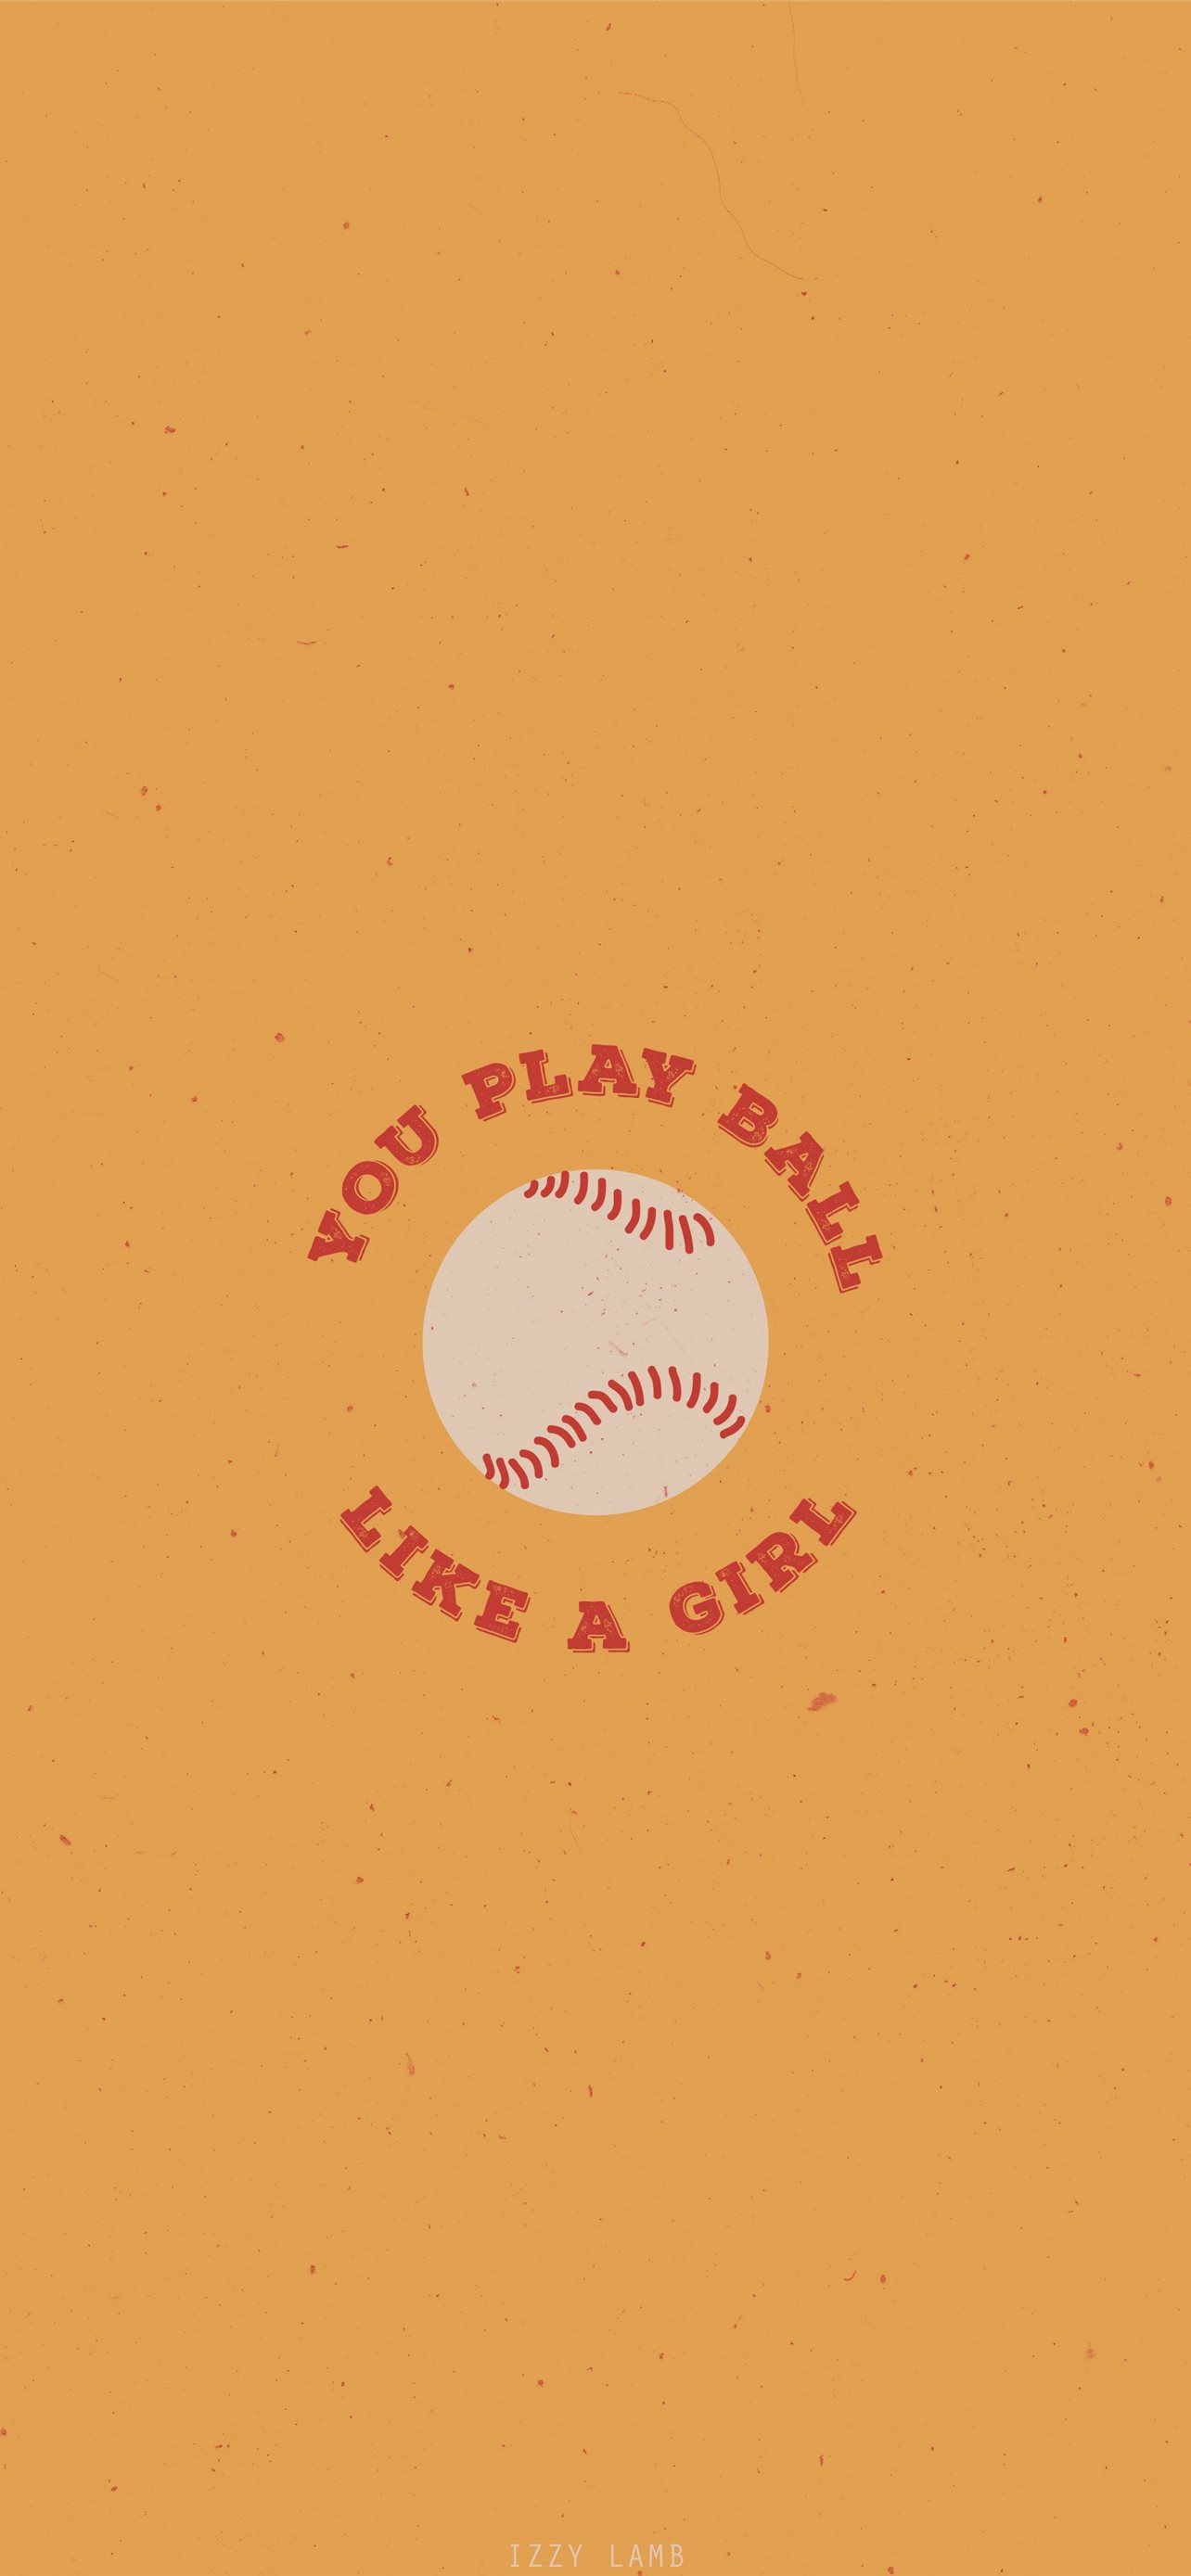 You play ball like a girl wallpaper by Izzy Lamb - Softball